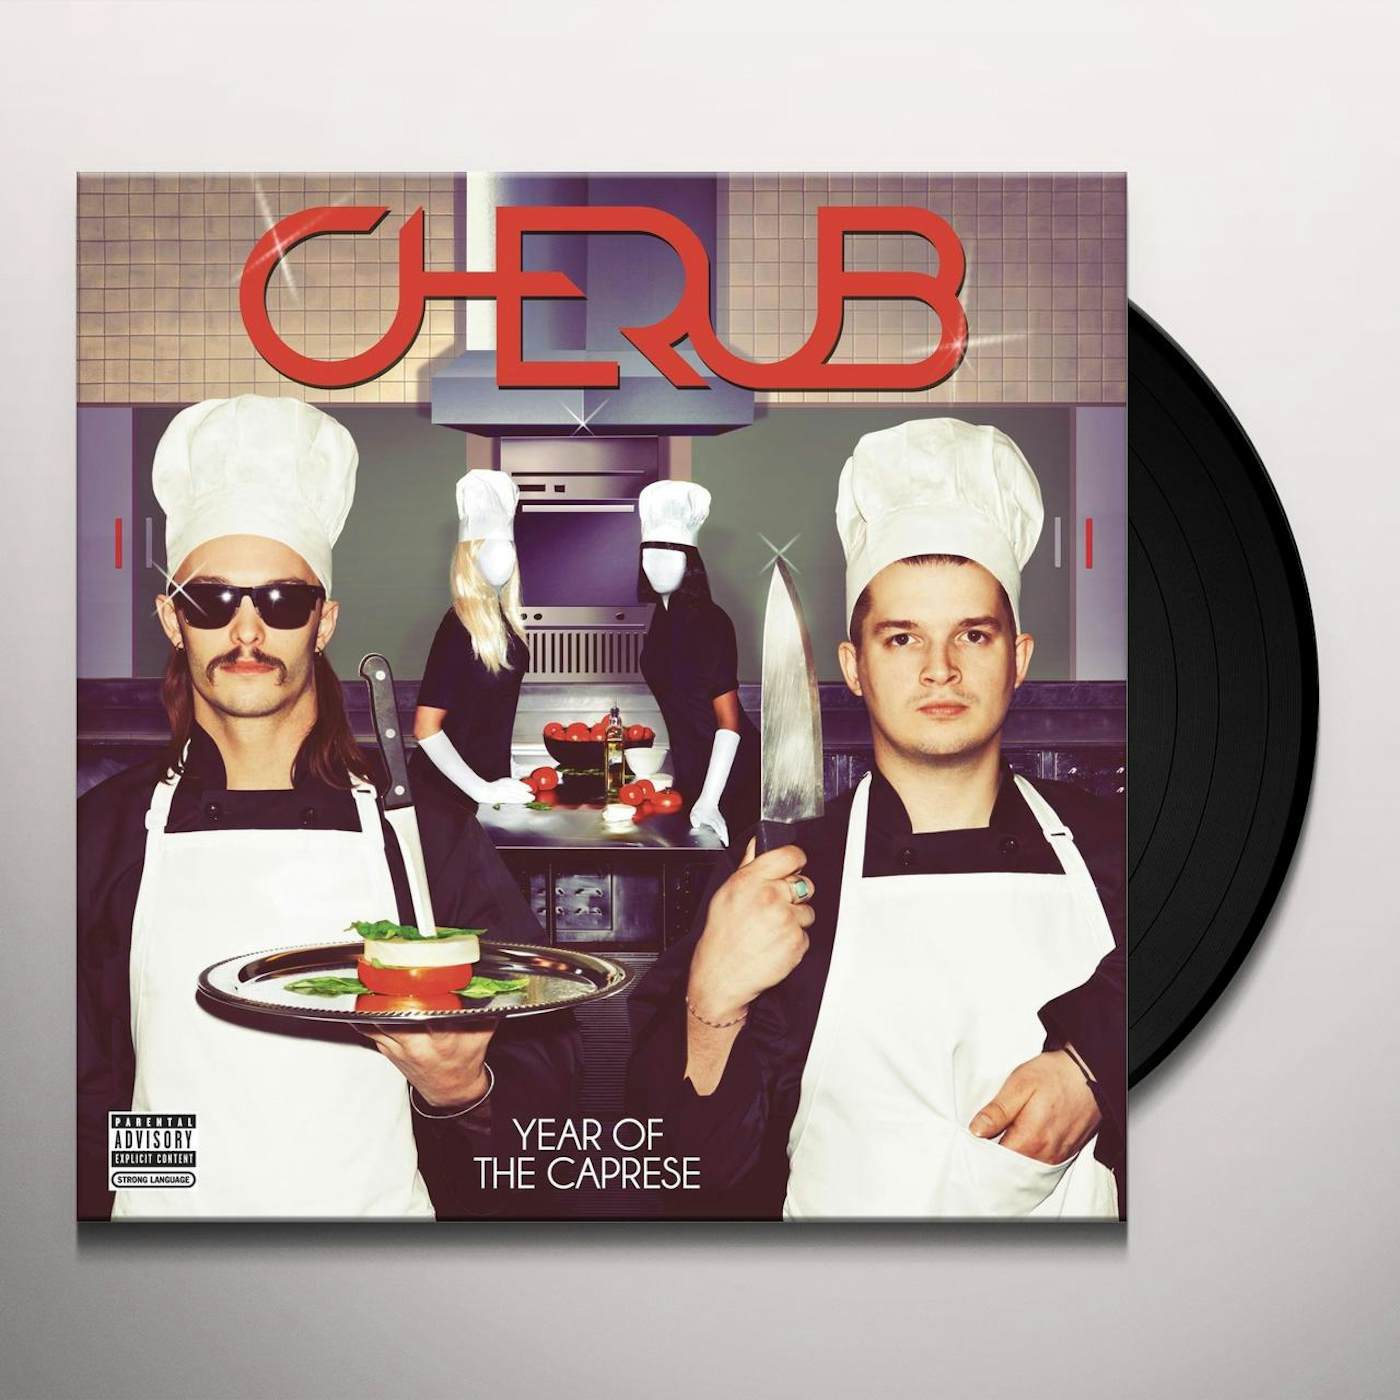 Cherub Year of the Caprese Vinyl Record